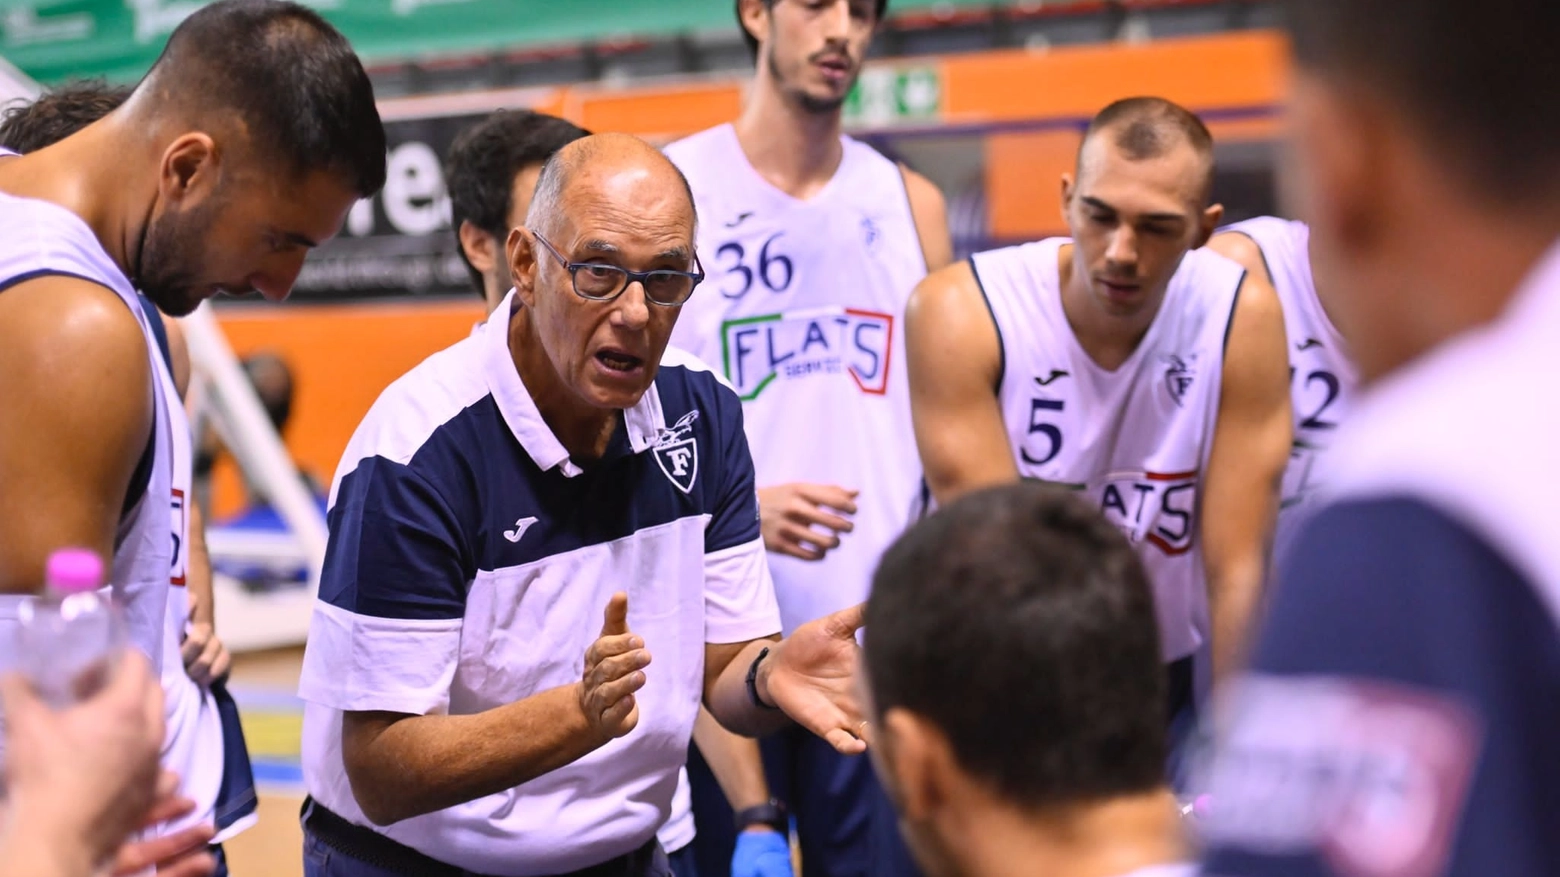 Coach Attilio Caja - Credit Giacomo Lodolo